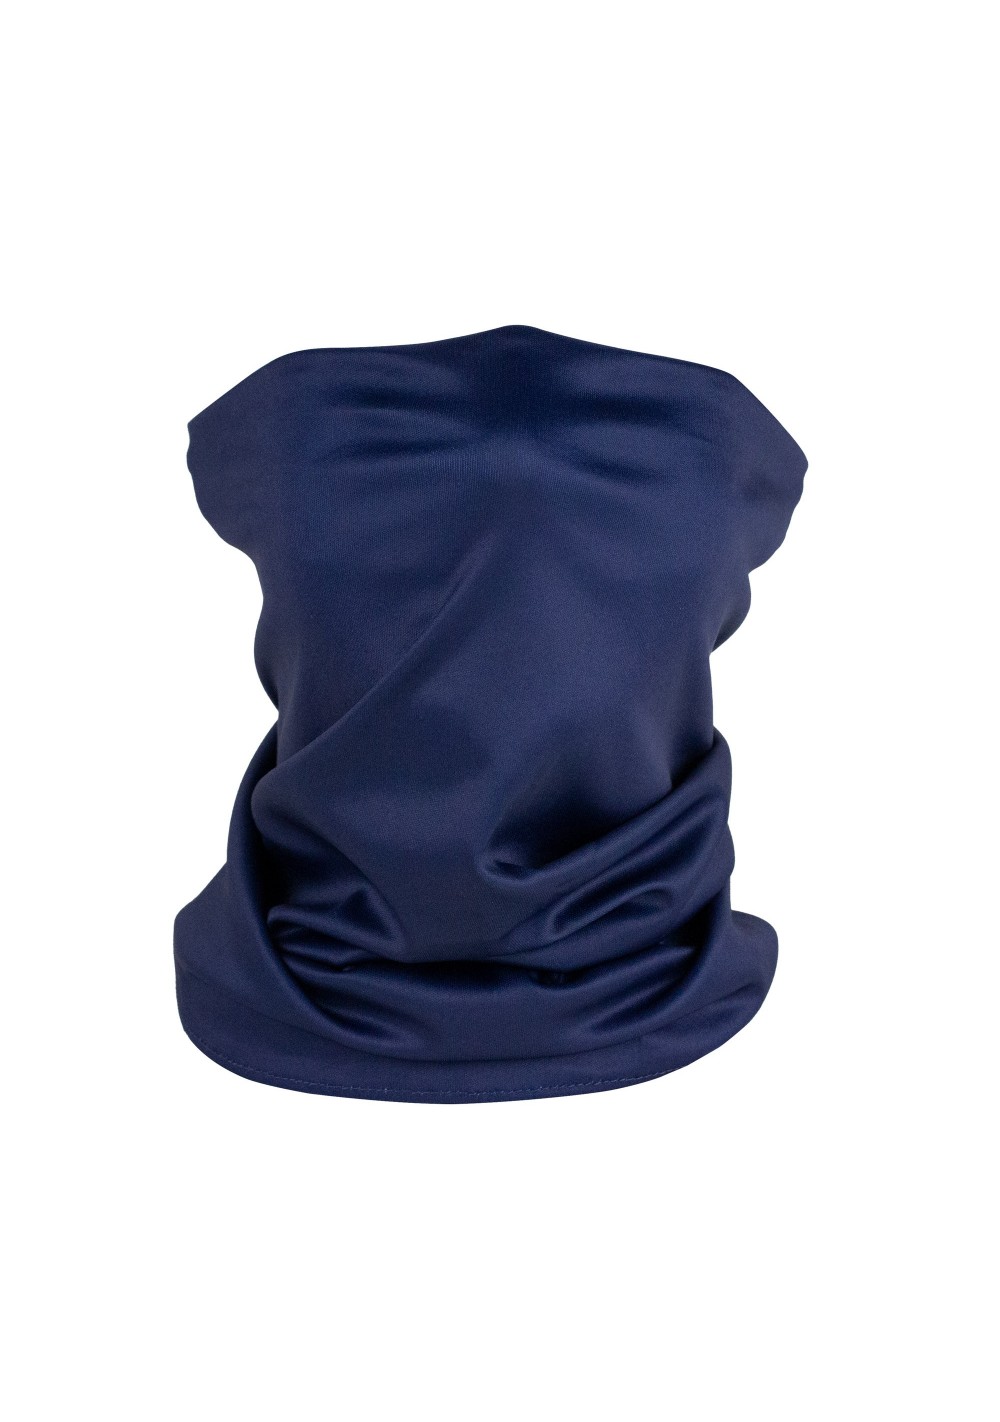 solid navy blue neck gaiter mask